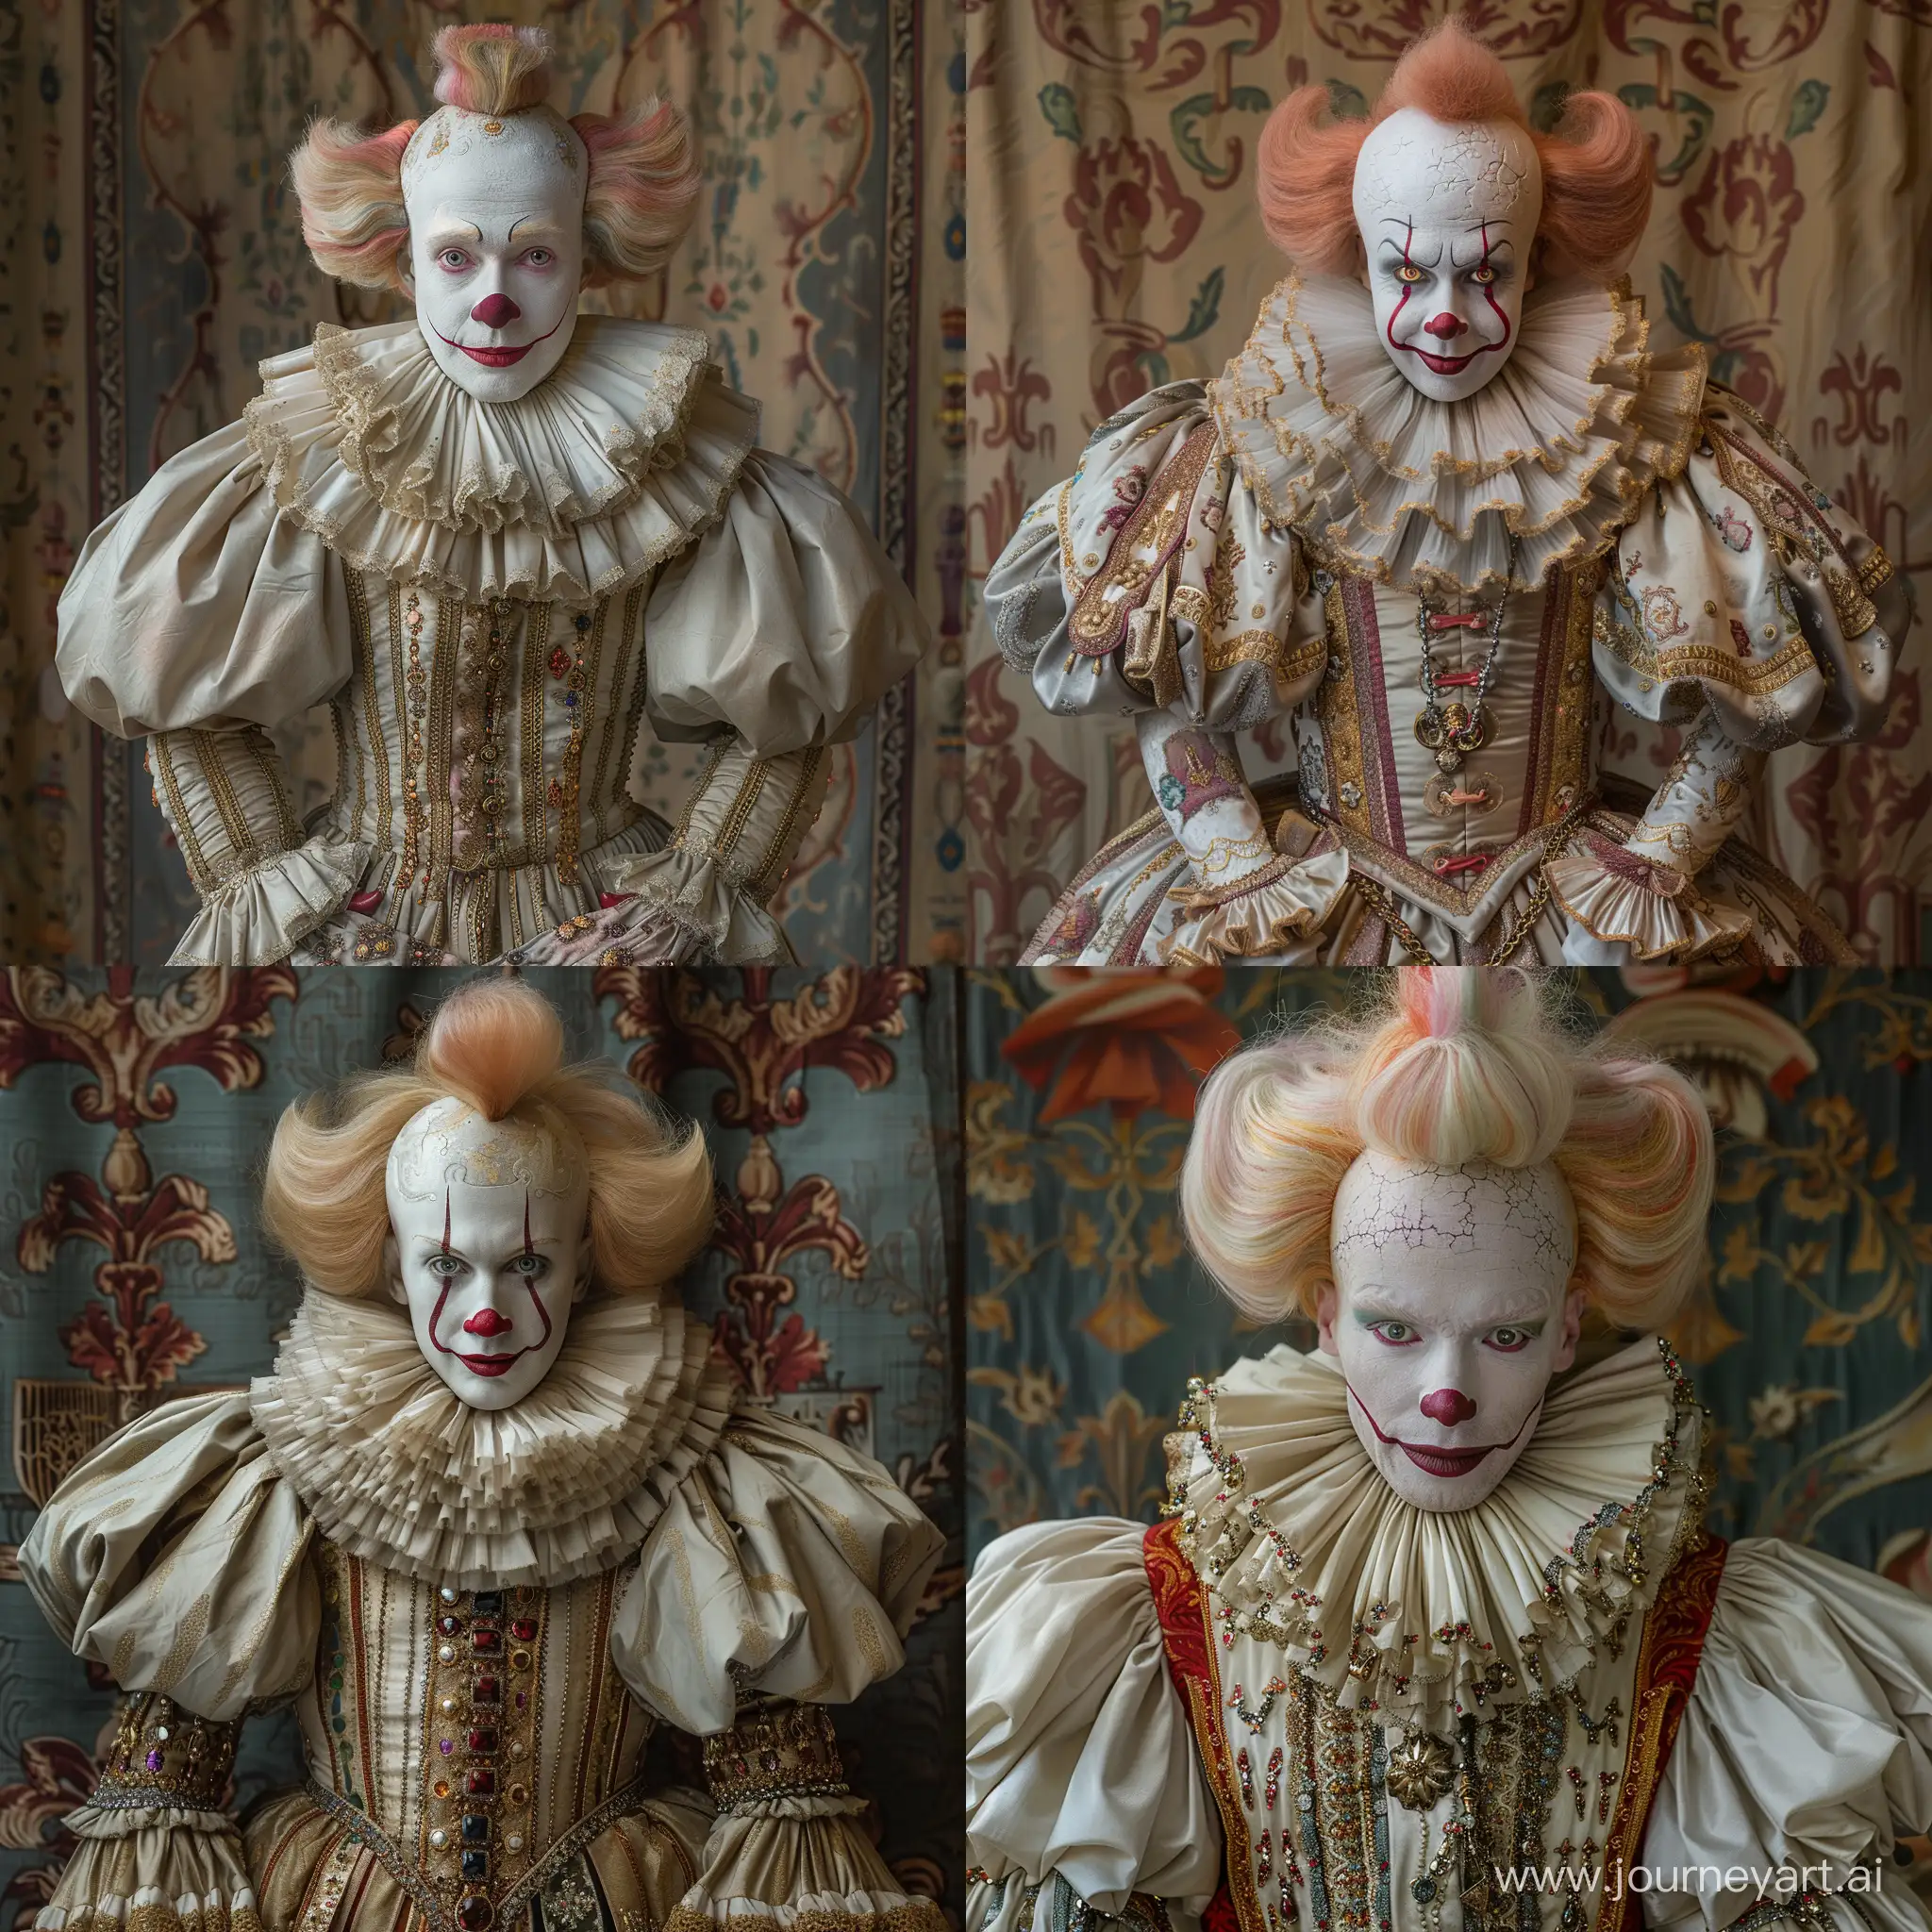 Renaissance-Clown-Portrait-Intricate-Costume-and-Regal-Aesthetic